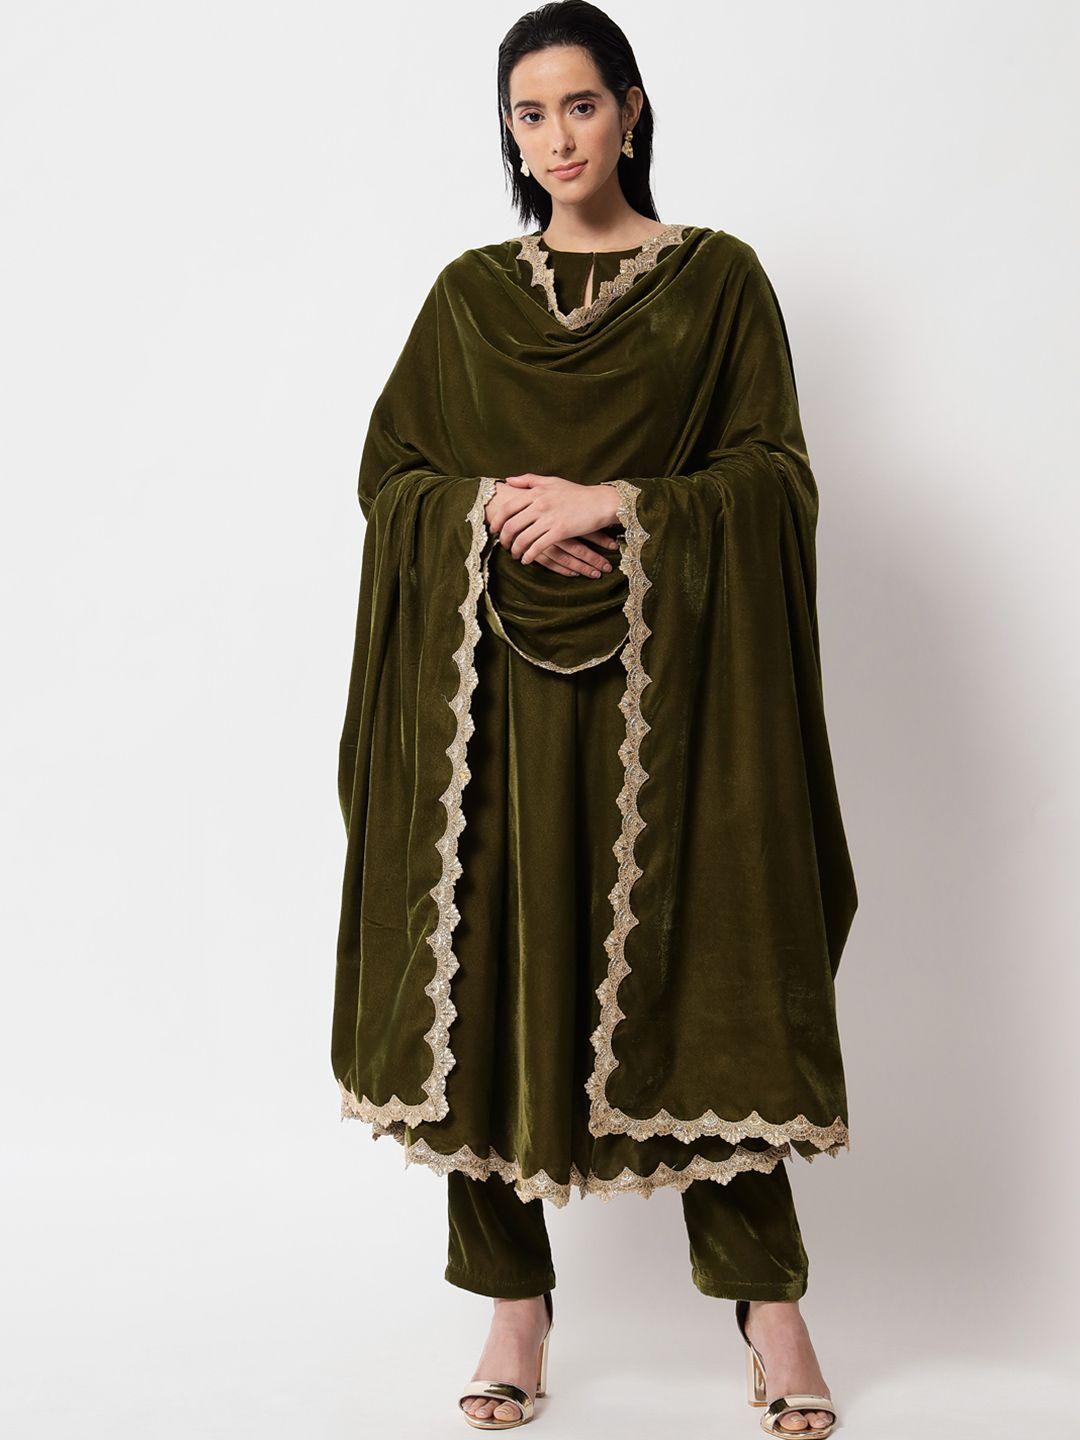 truebrowns women olive green solid velvet lace shawl